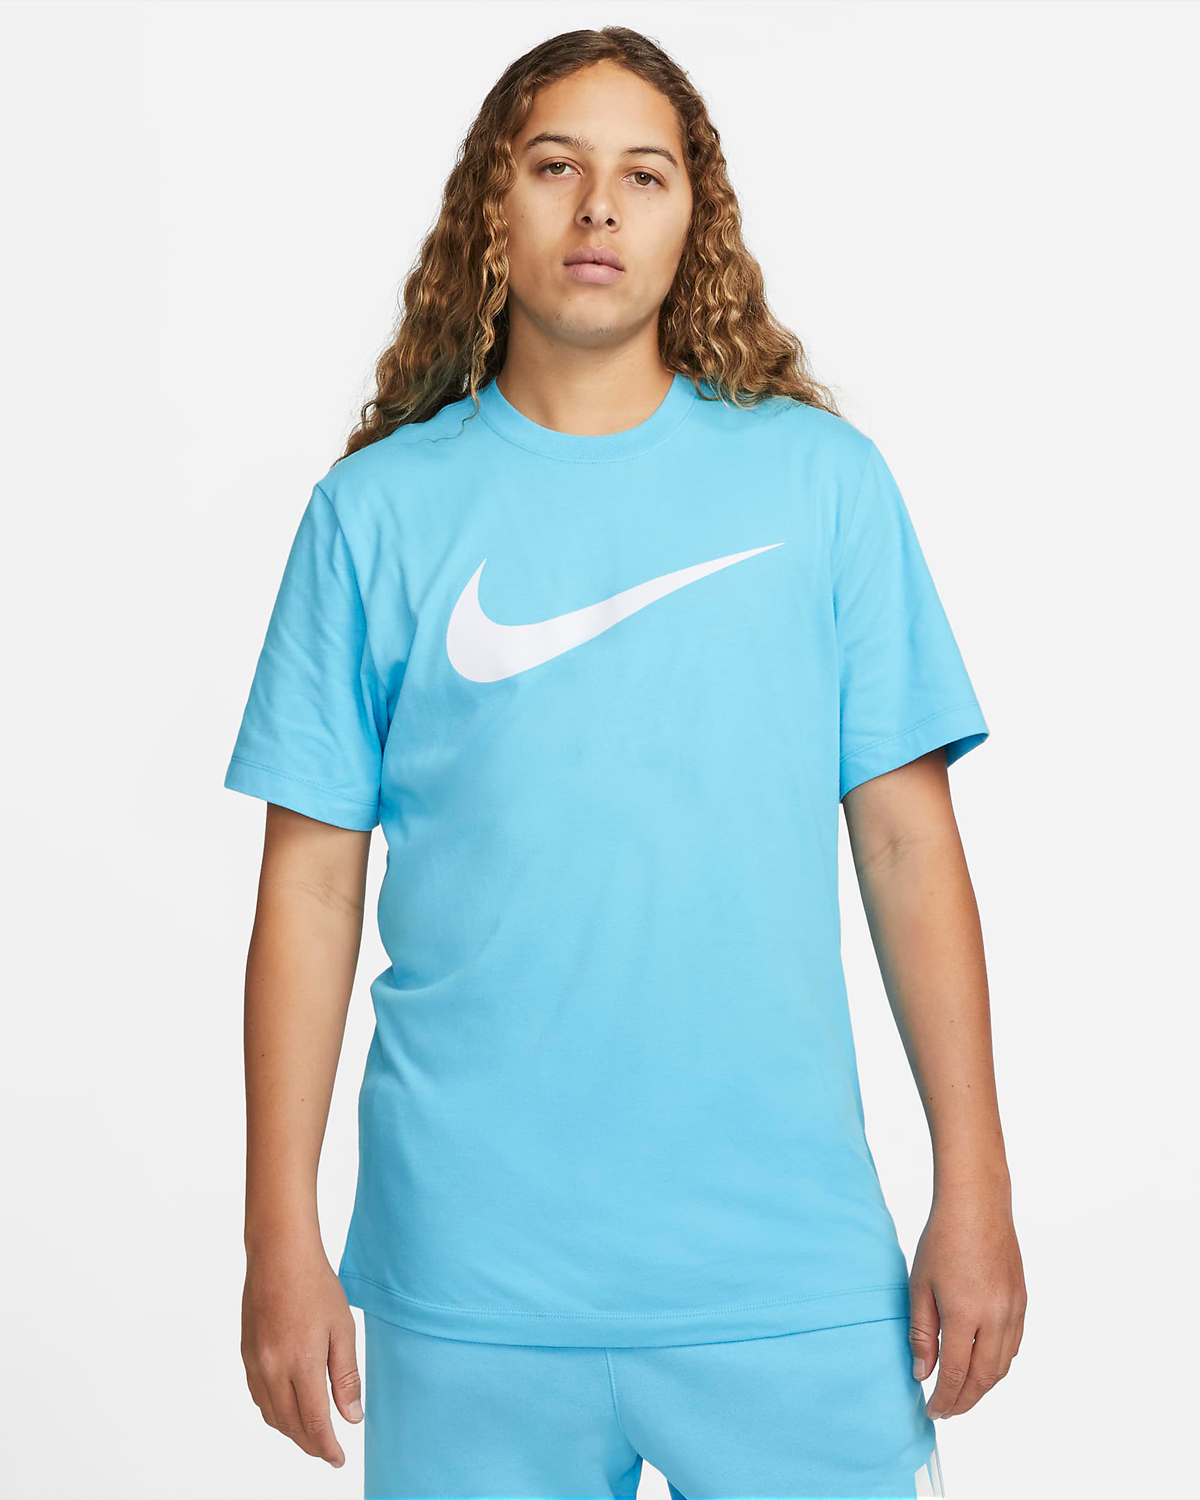 Nike-Swoosh-T-Shirt-Baltic-Blue